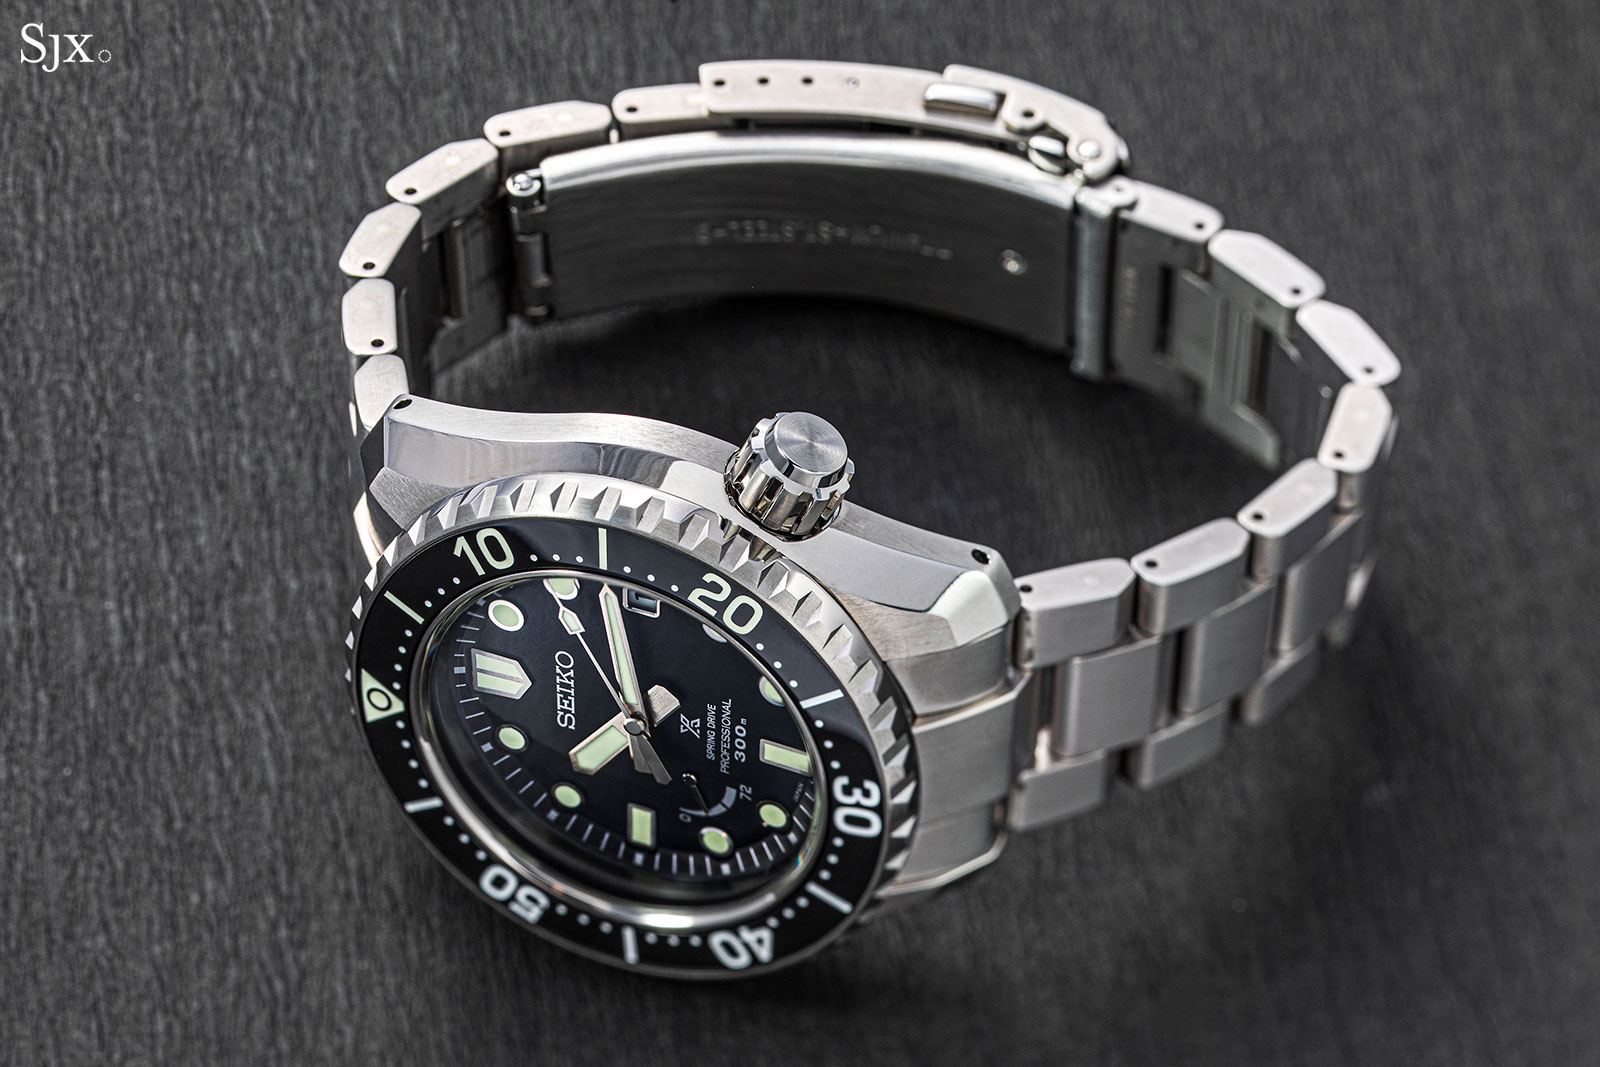 Up Close: Seiko Prospex LX Spring Drive Diver SNR029 | SJX Watches